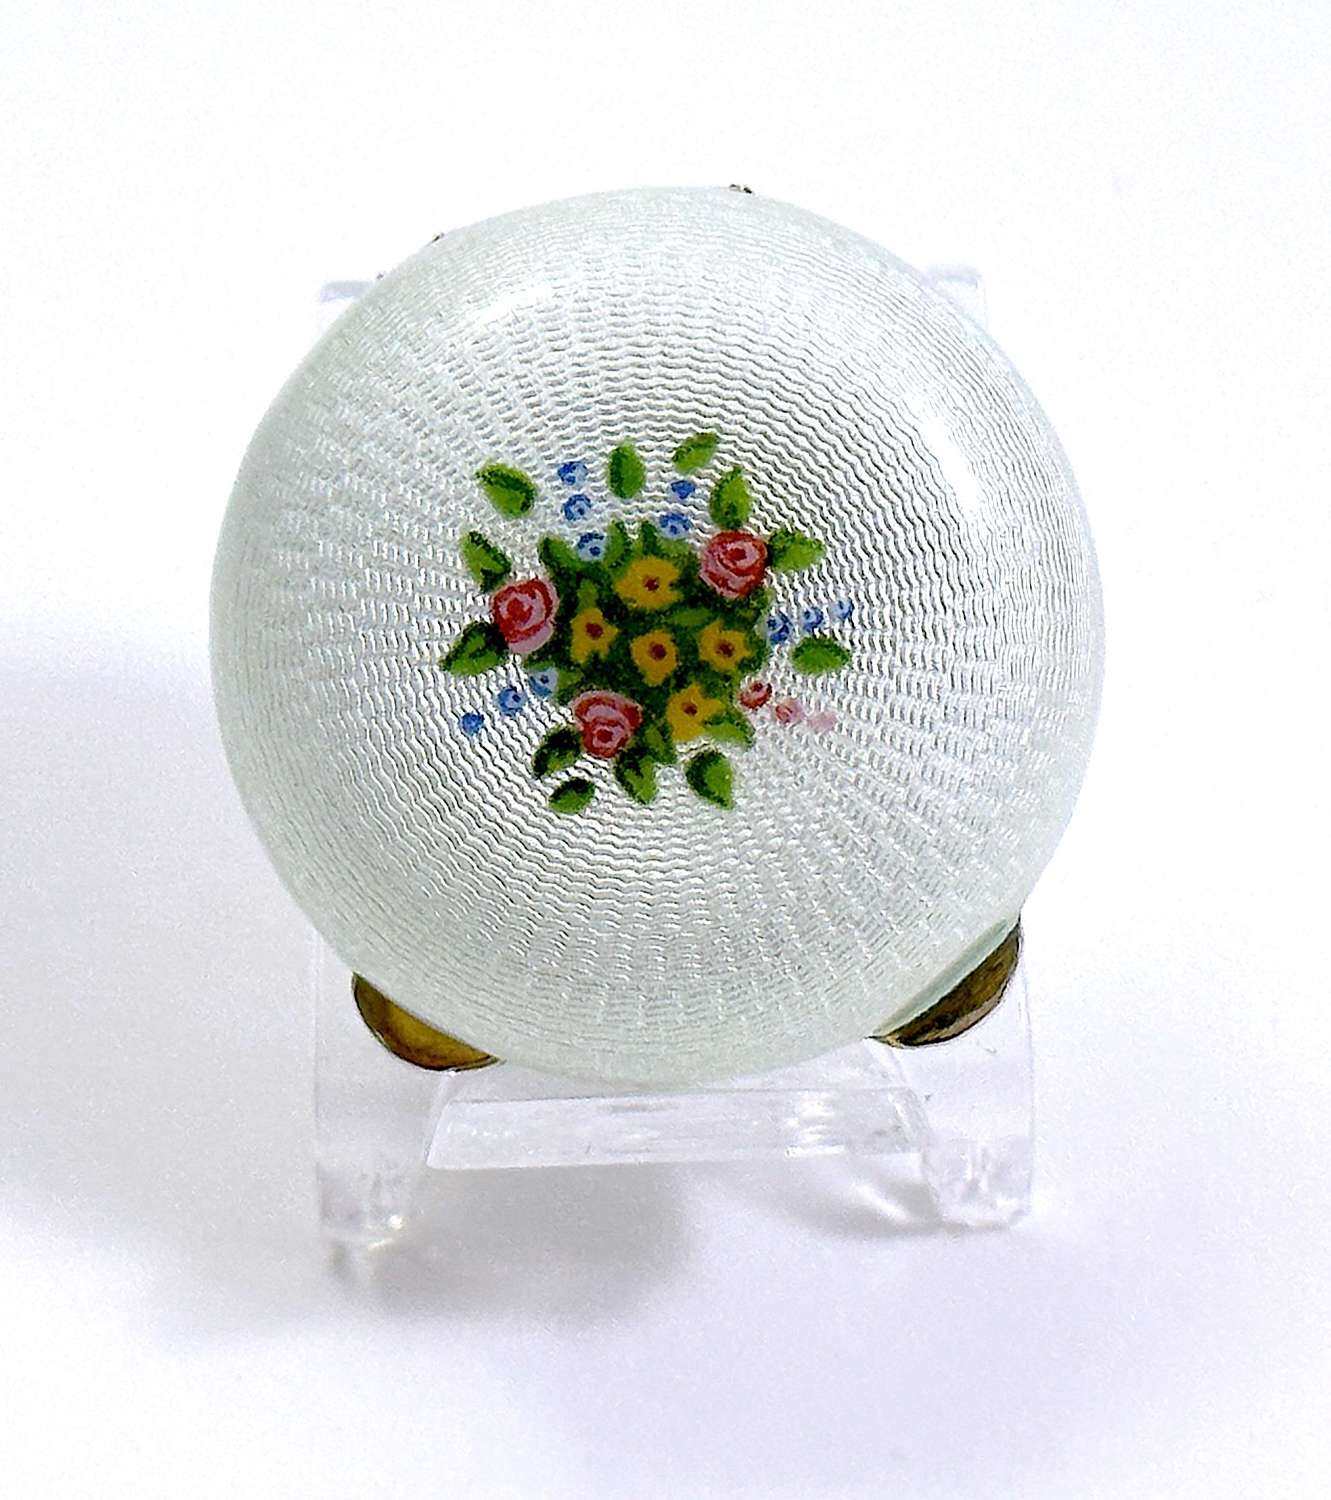 Exquisite Miniature Antique Guilloche Enamel Decorated with Flowers.